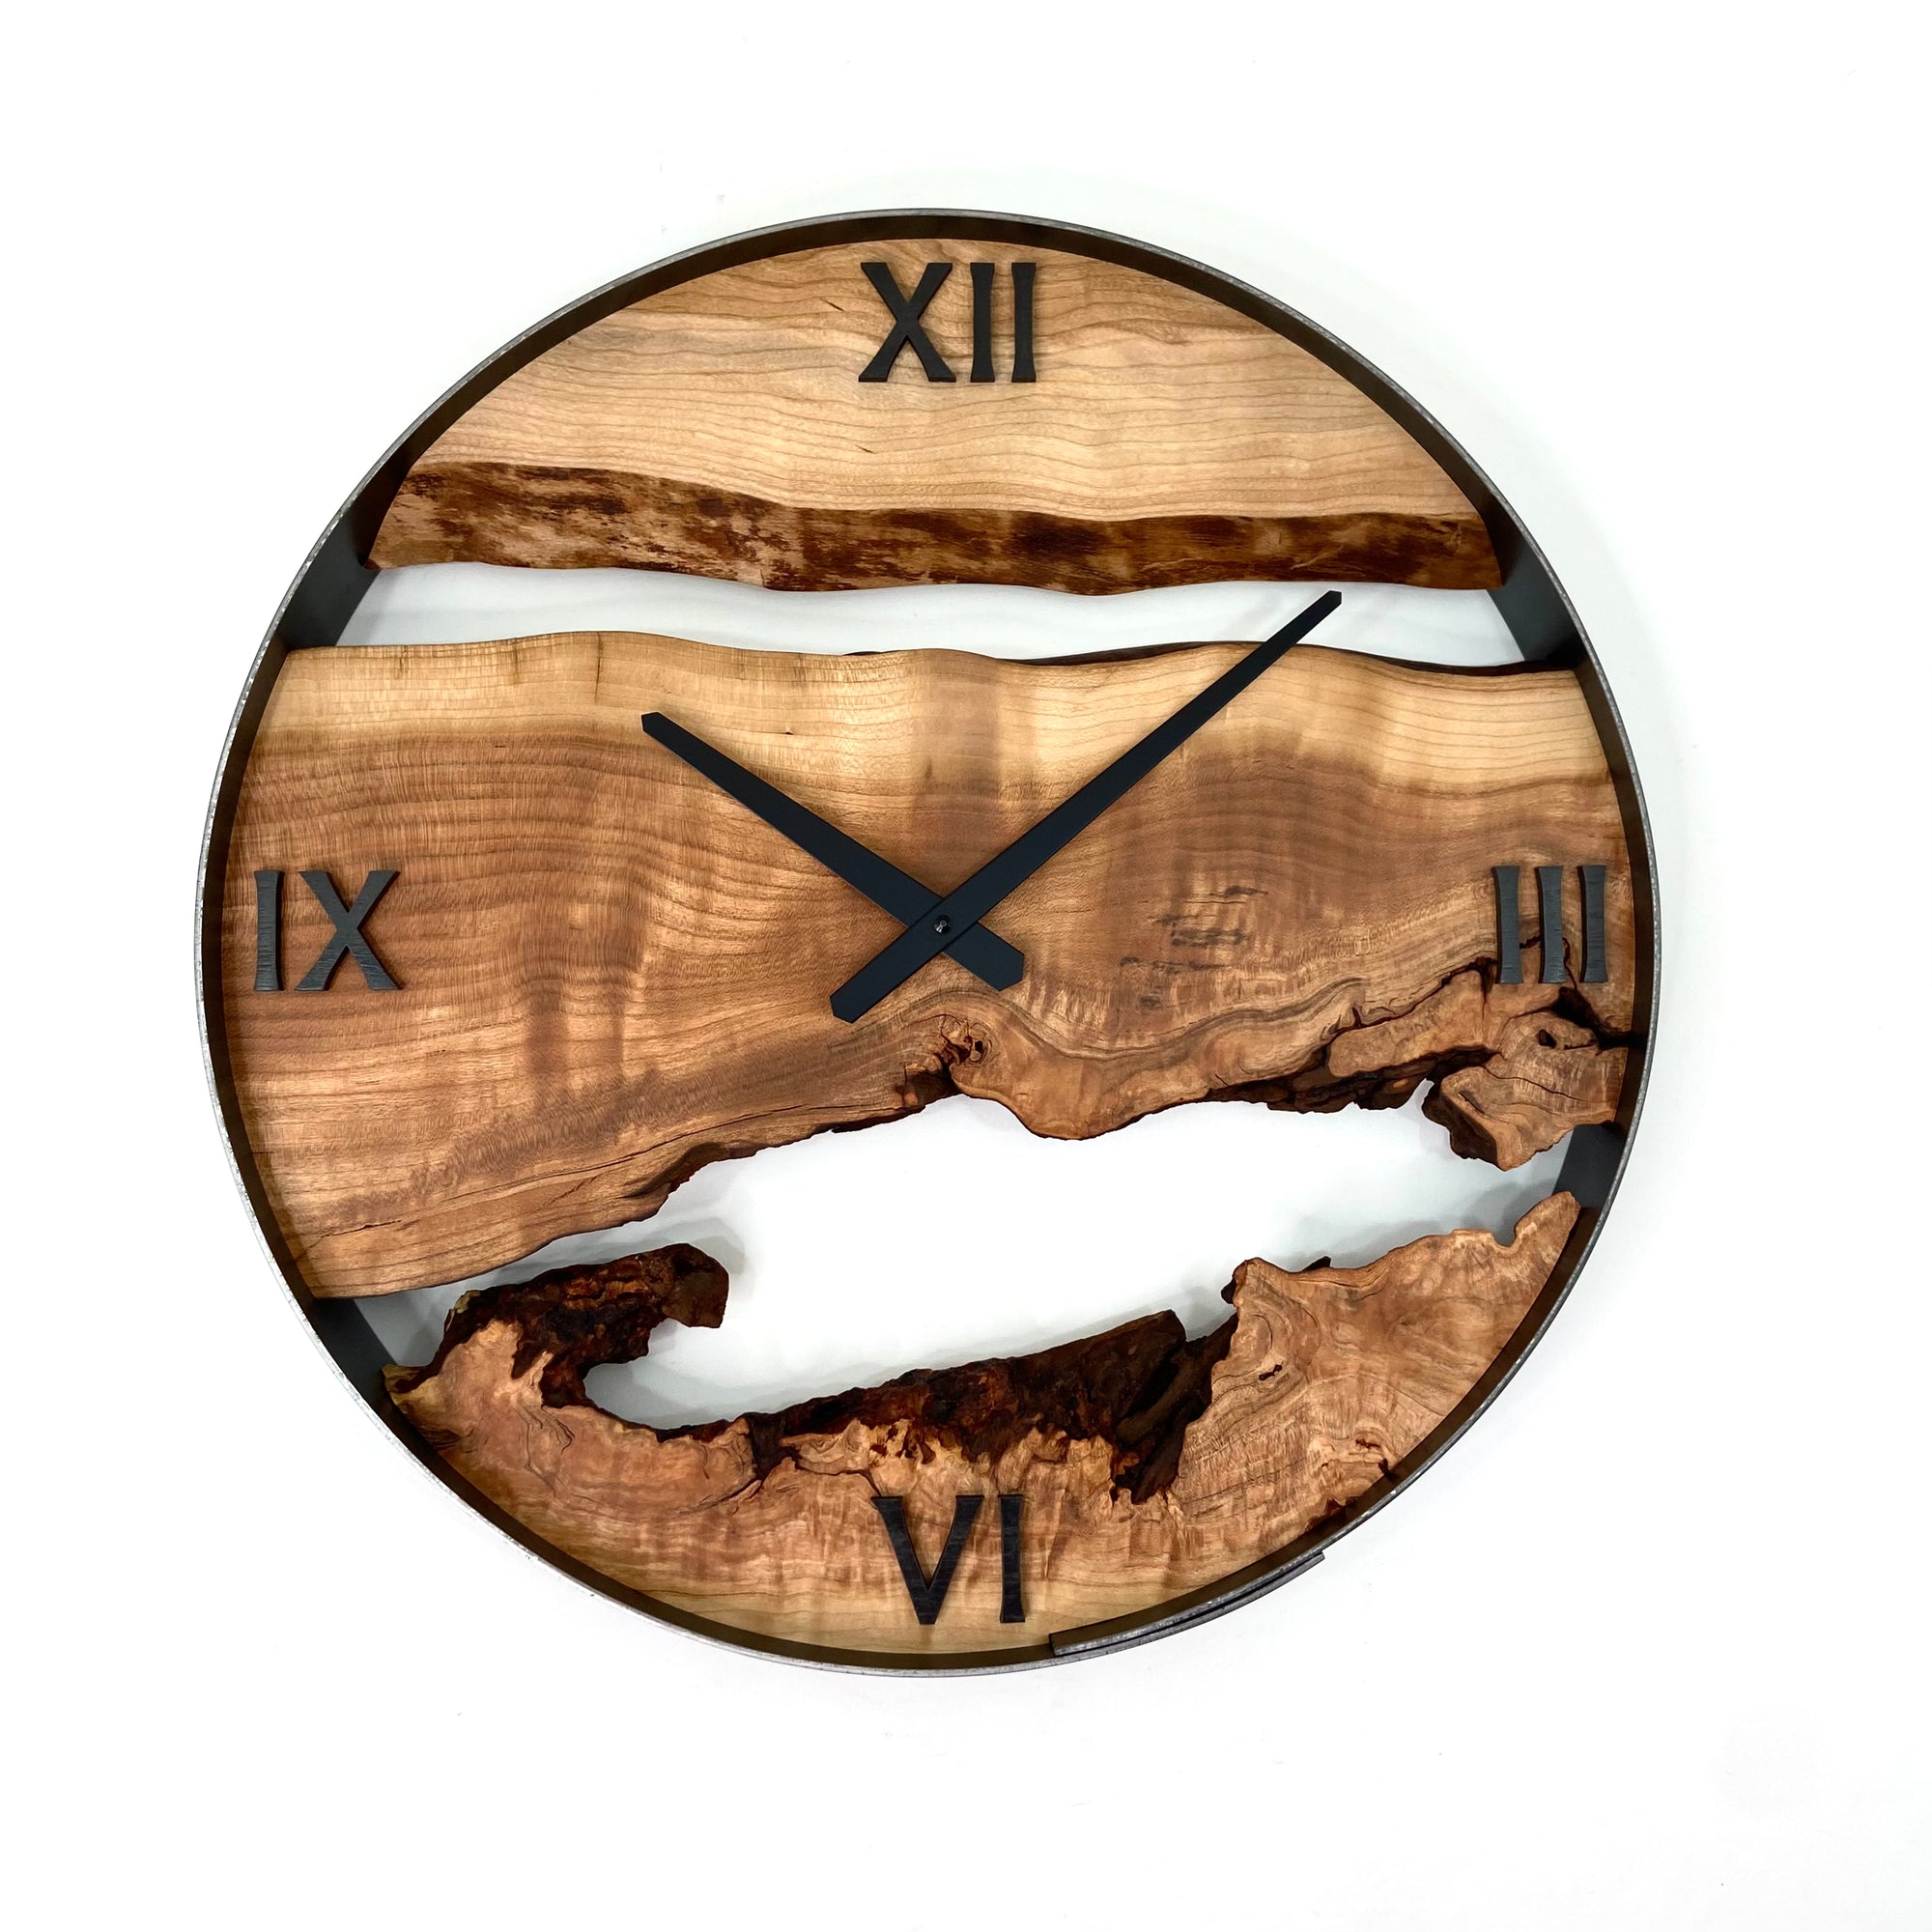 18” Cherry Live Edge Wood Clock